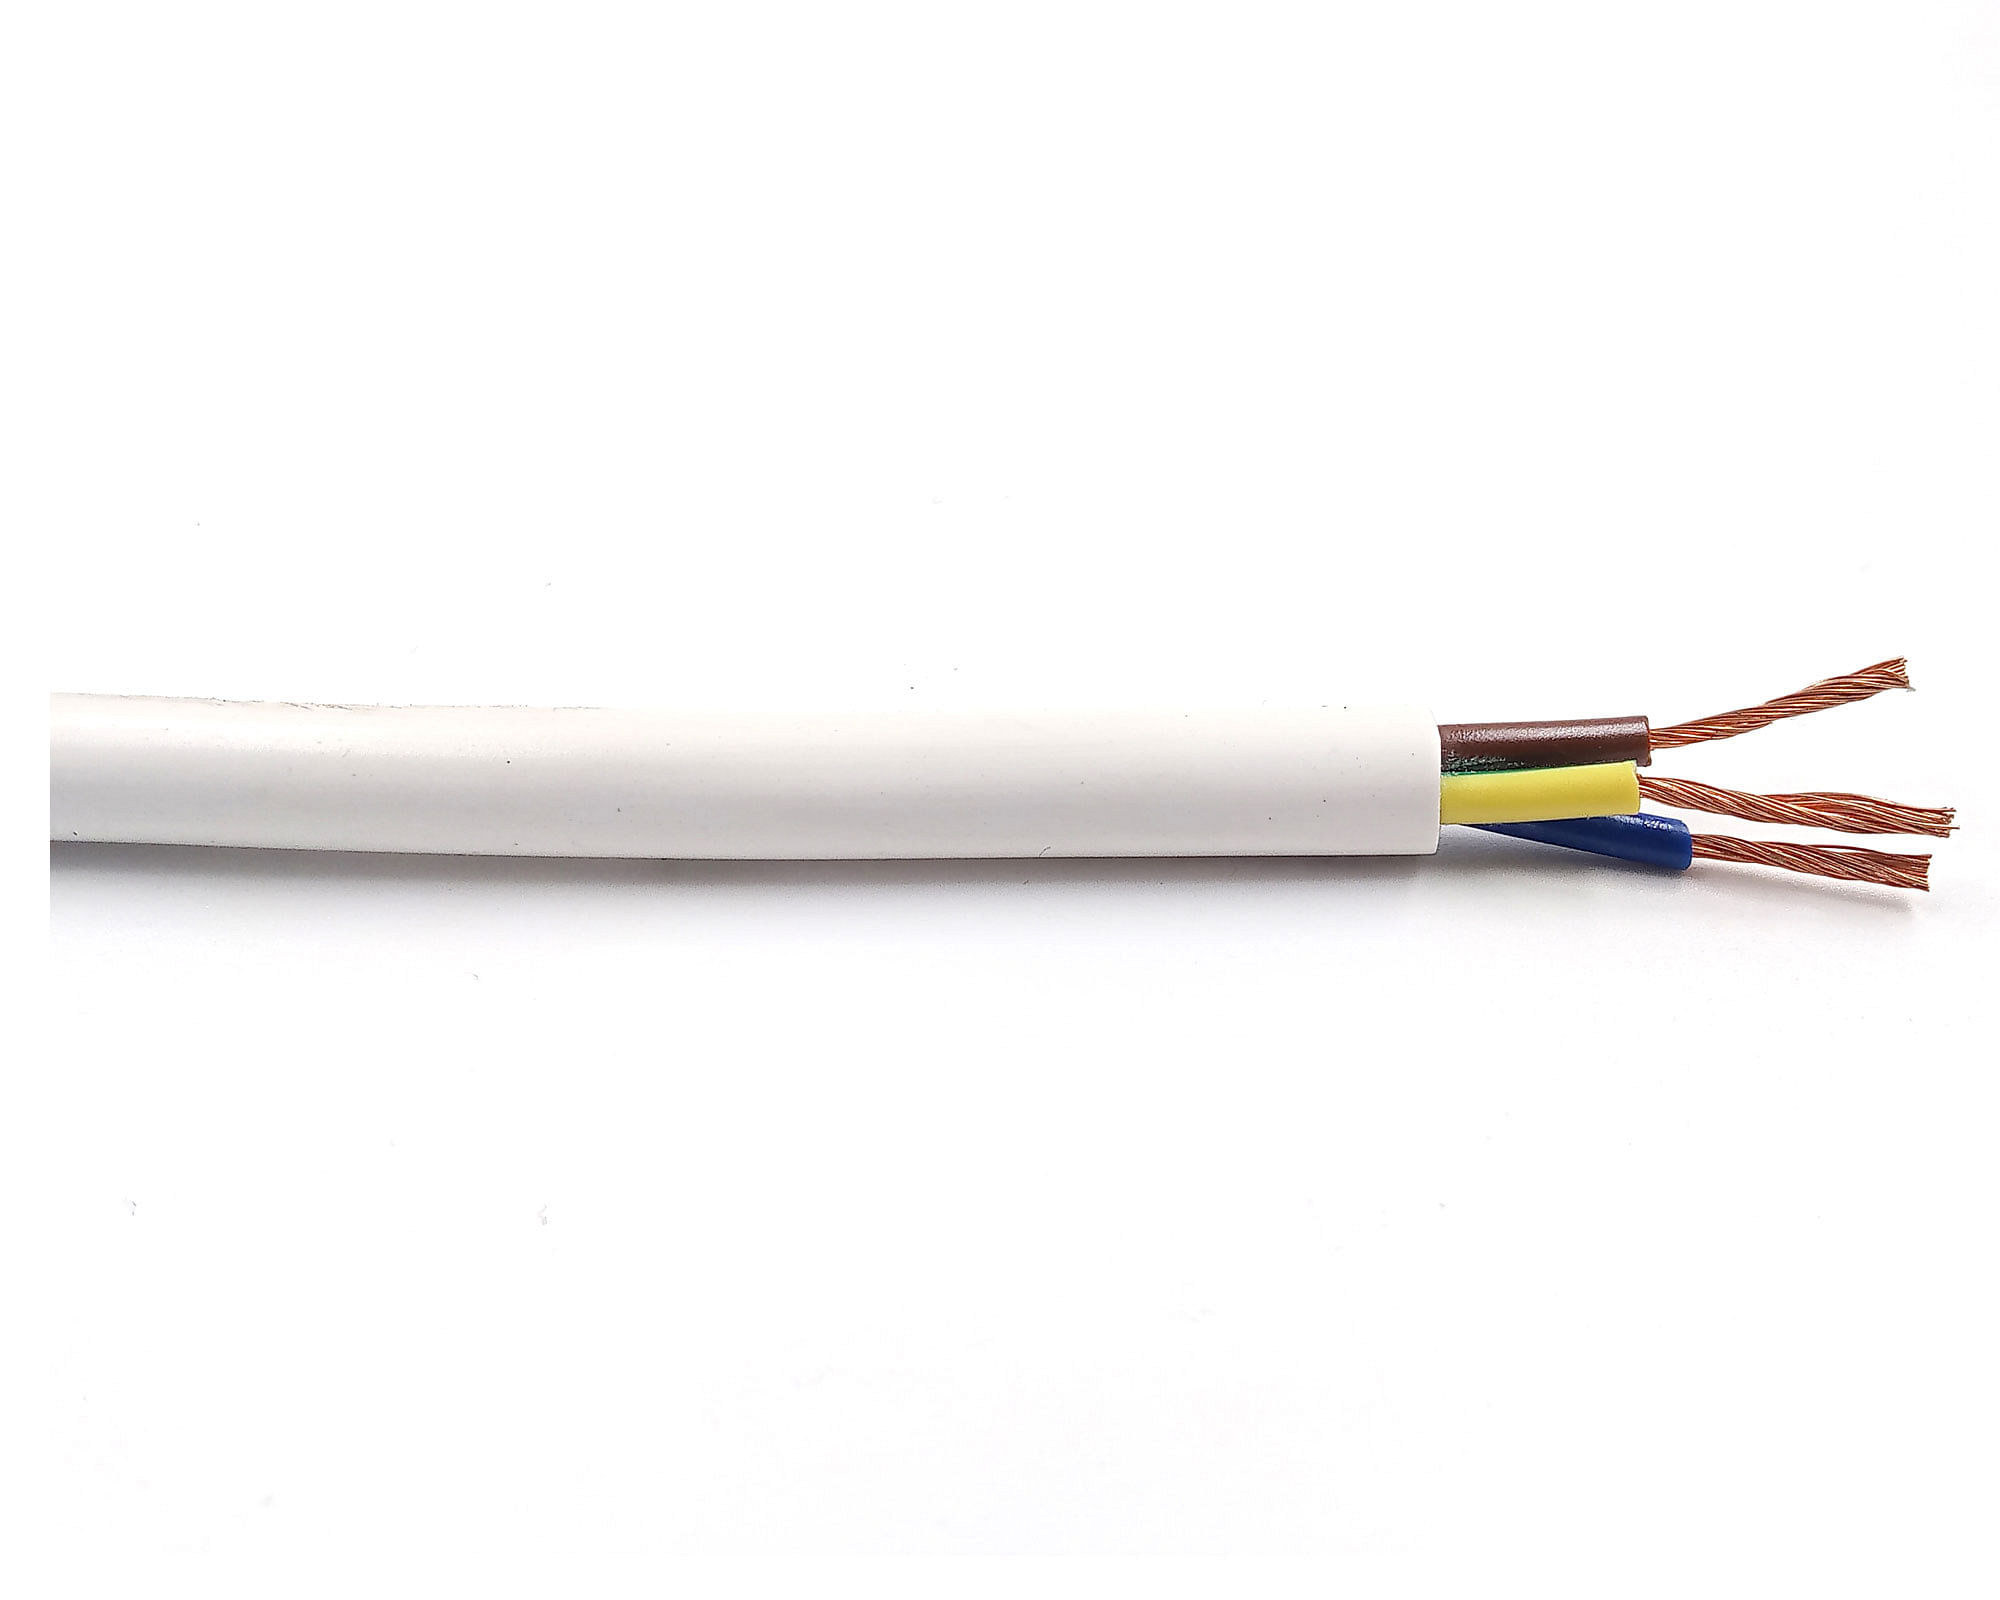 Cordón cable eléctrico 3 x 1,5 mm - Rema